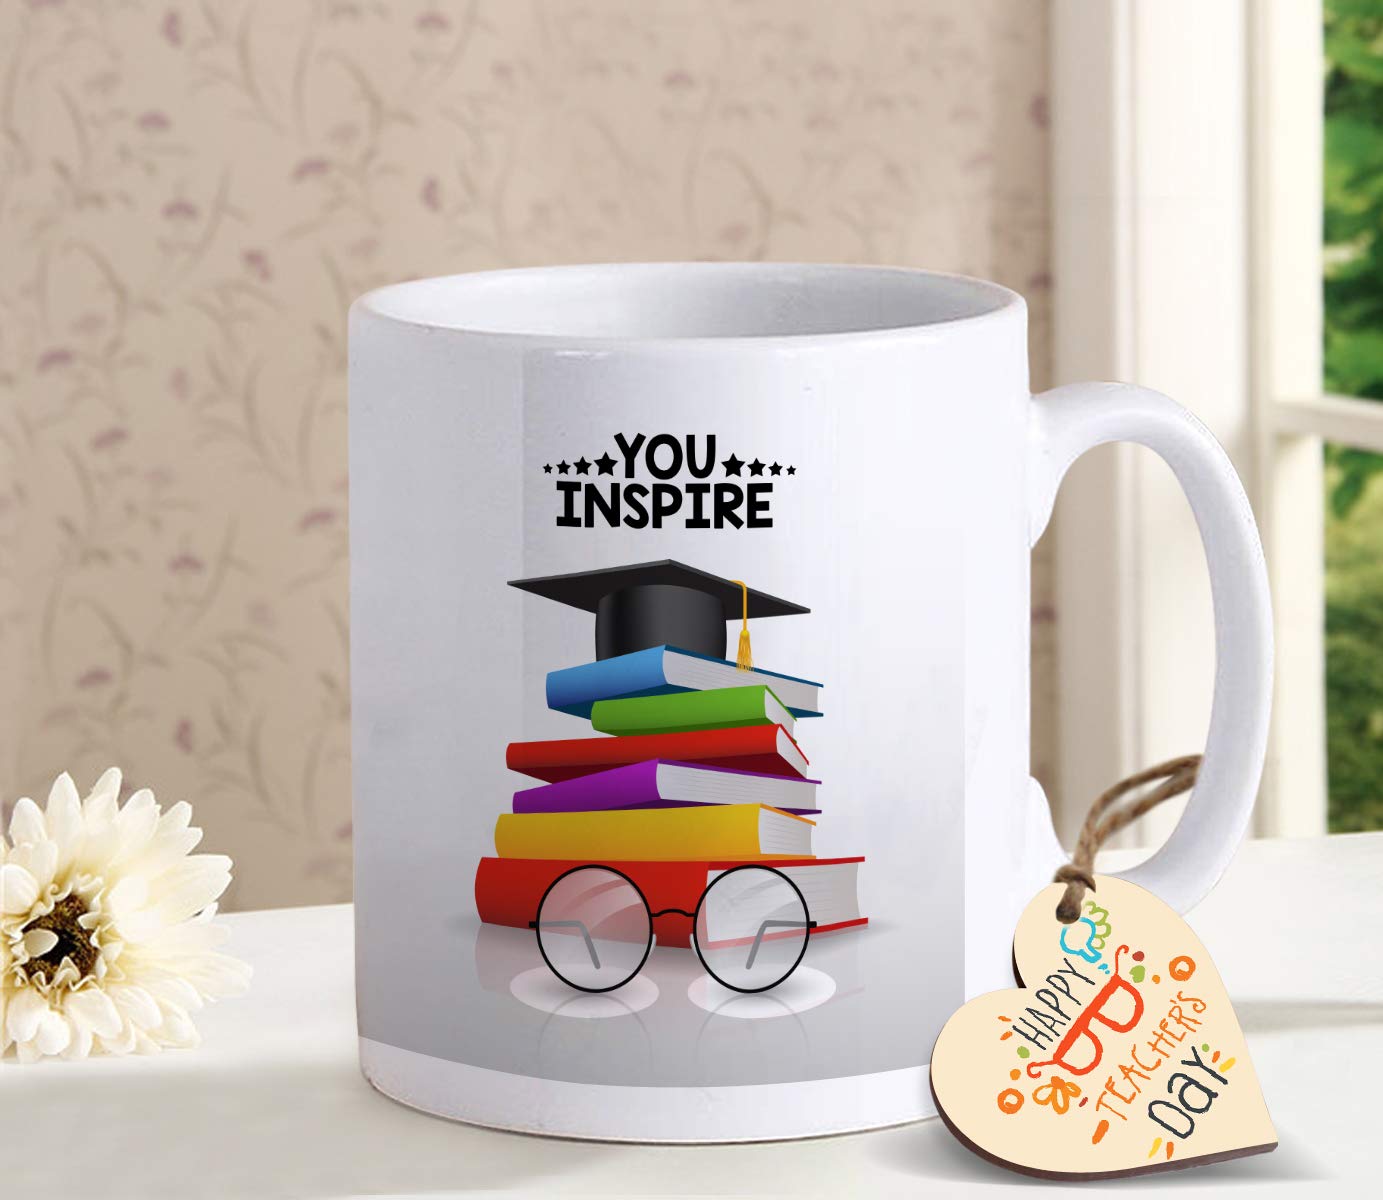 ing Happy Teachers Day with Scholer Ship Teachers Day Gift Printed White  Coffee Mug | White